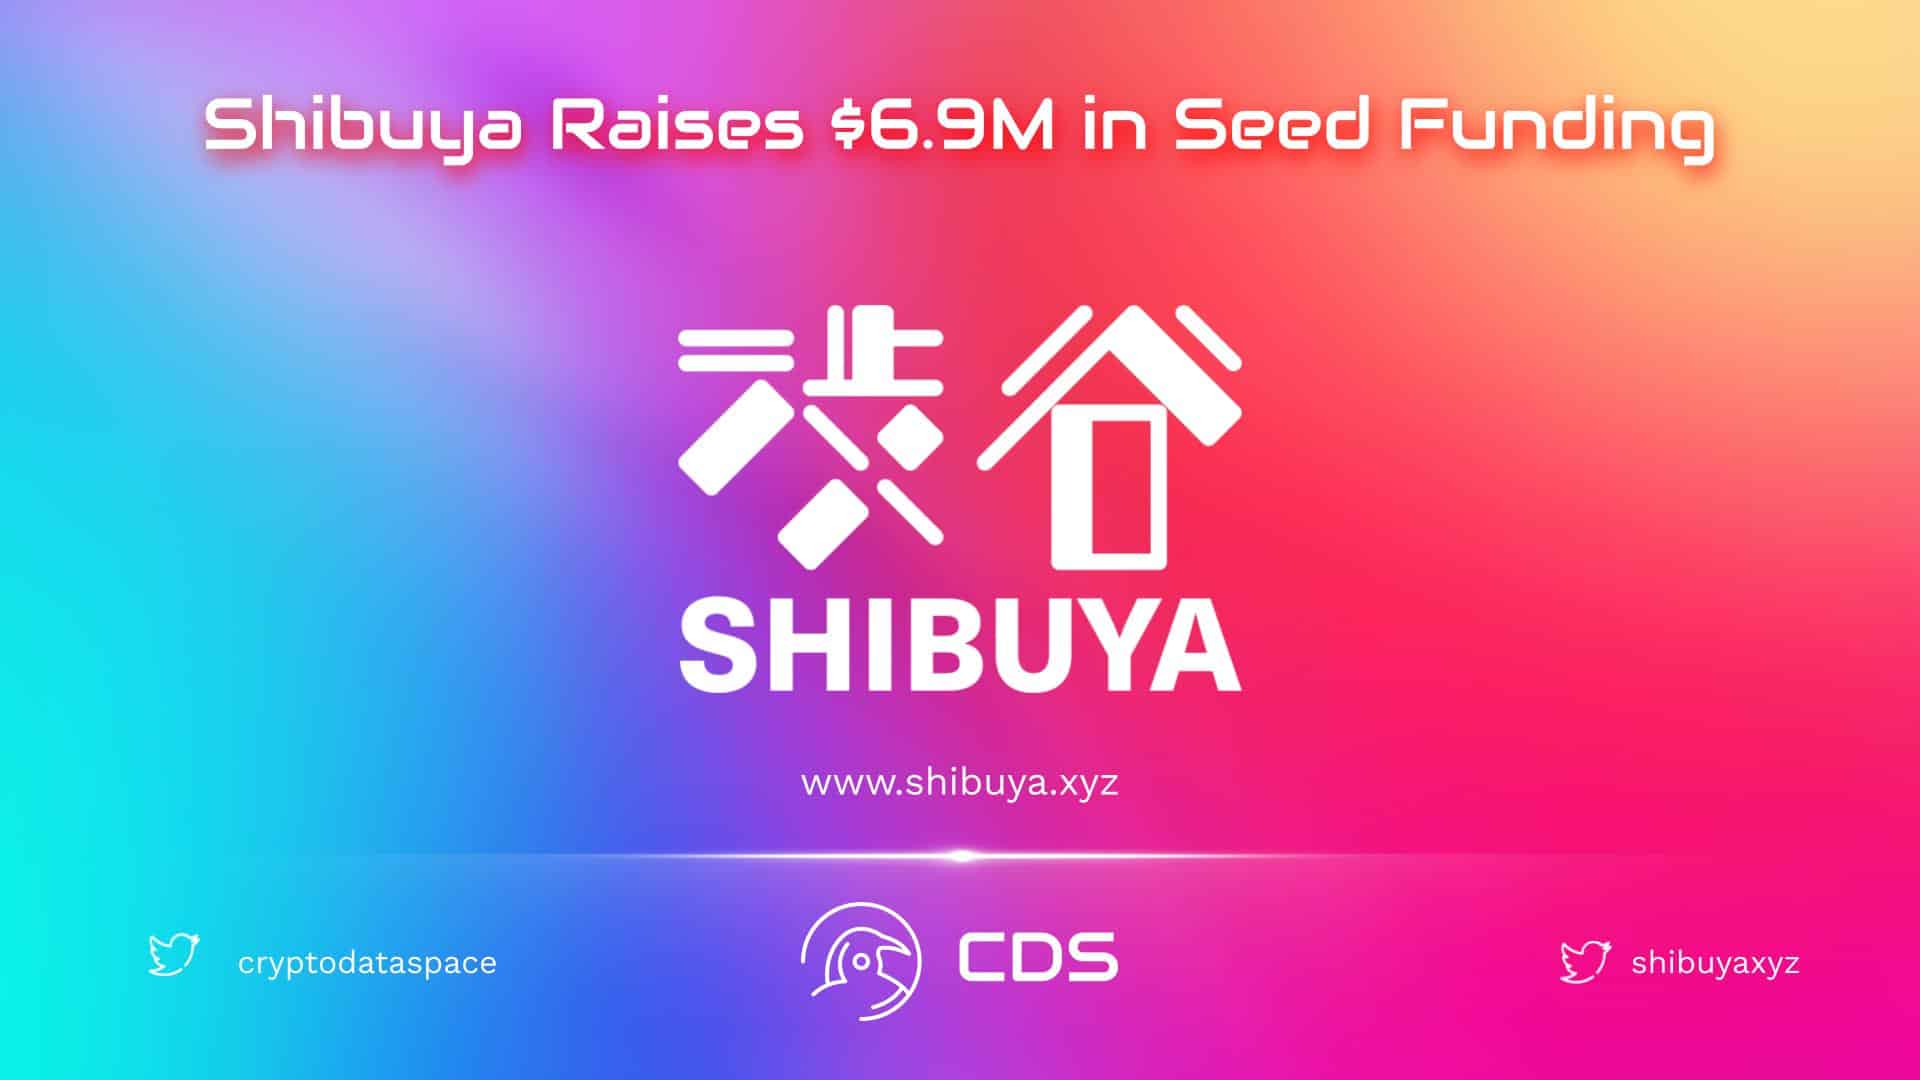 Shibuya Raises $6.9M in Seed Funding